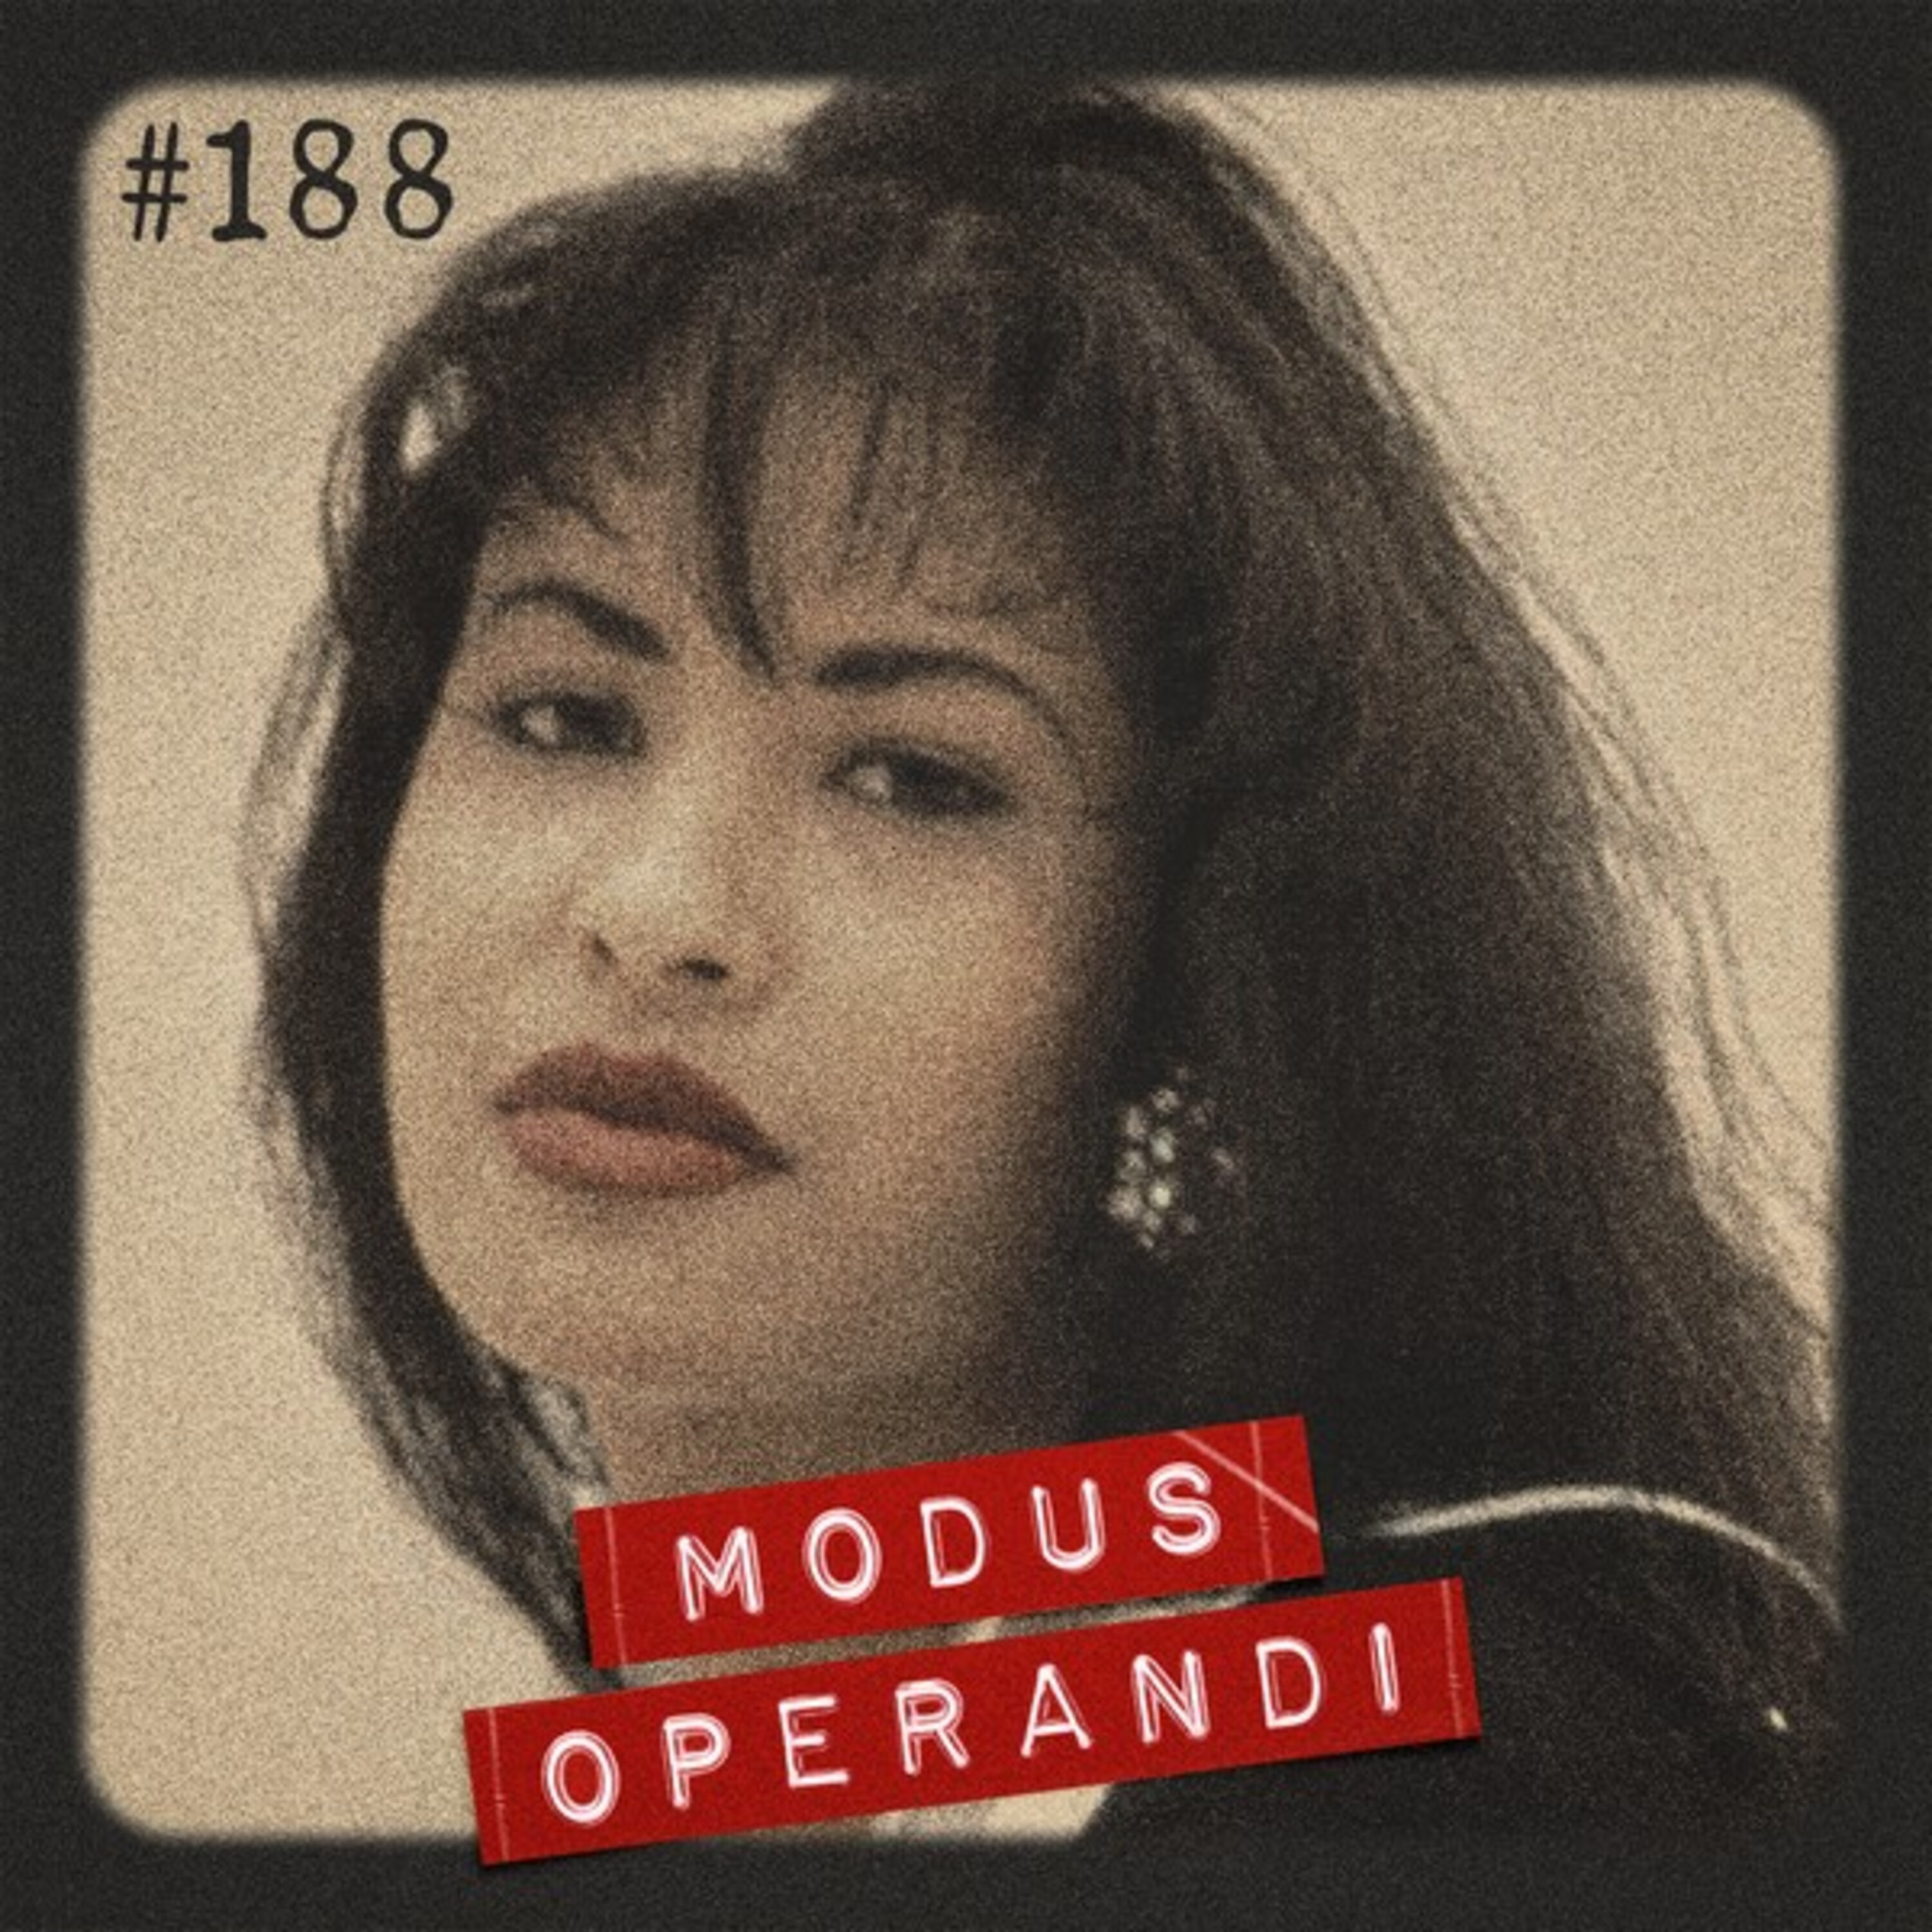 #188 - O trágico assassinato de Selena Quintanilla